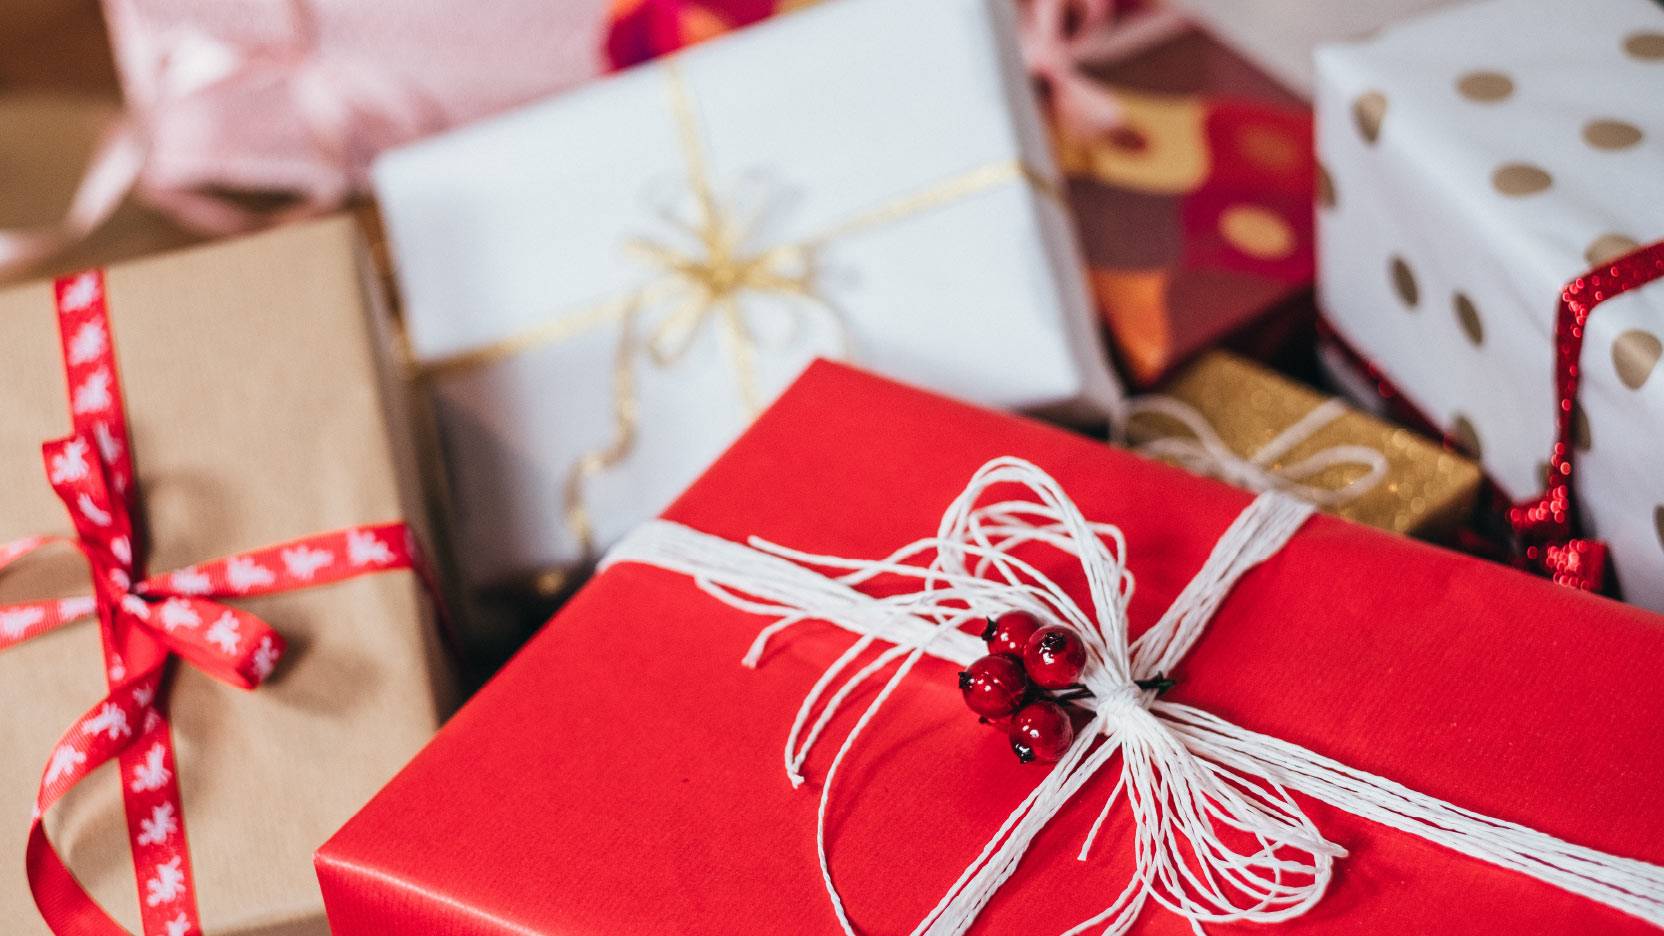 GUIDE: PriceRunners julegaveideer - 52 håndplukkede gaver